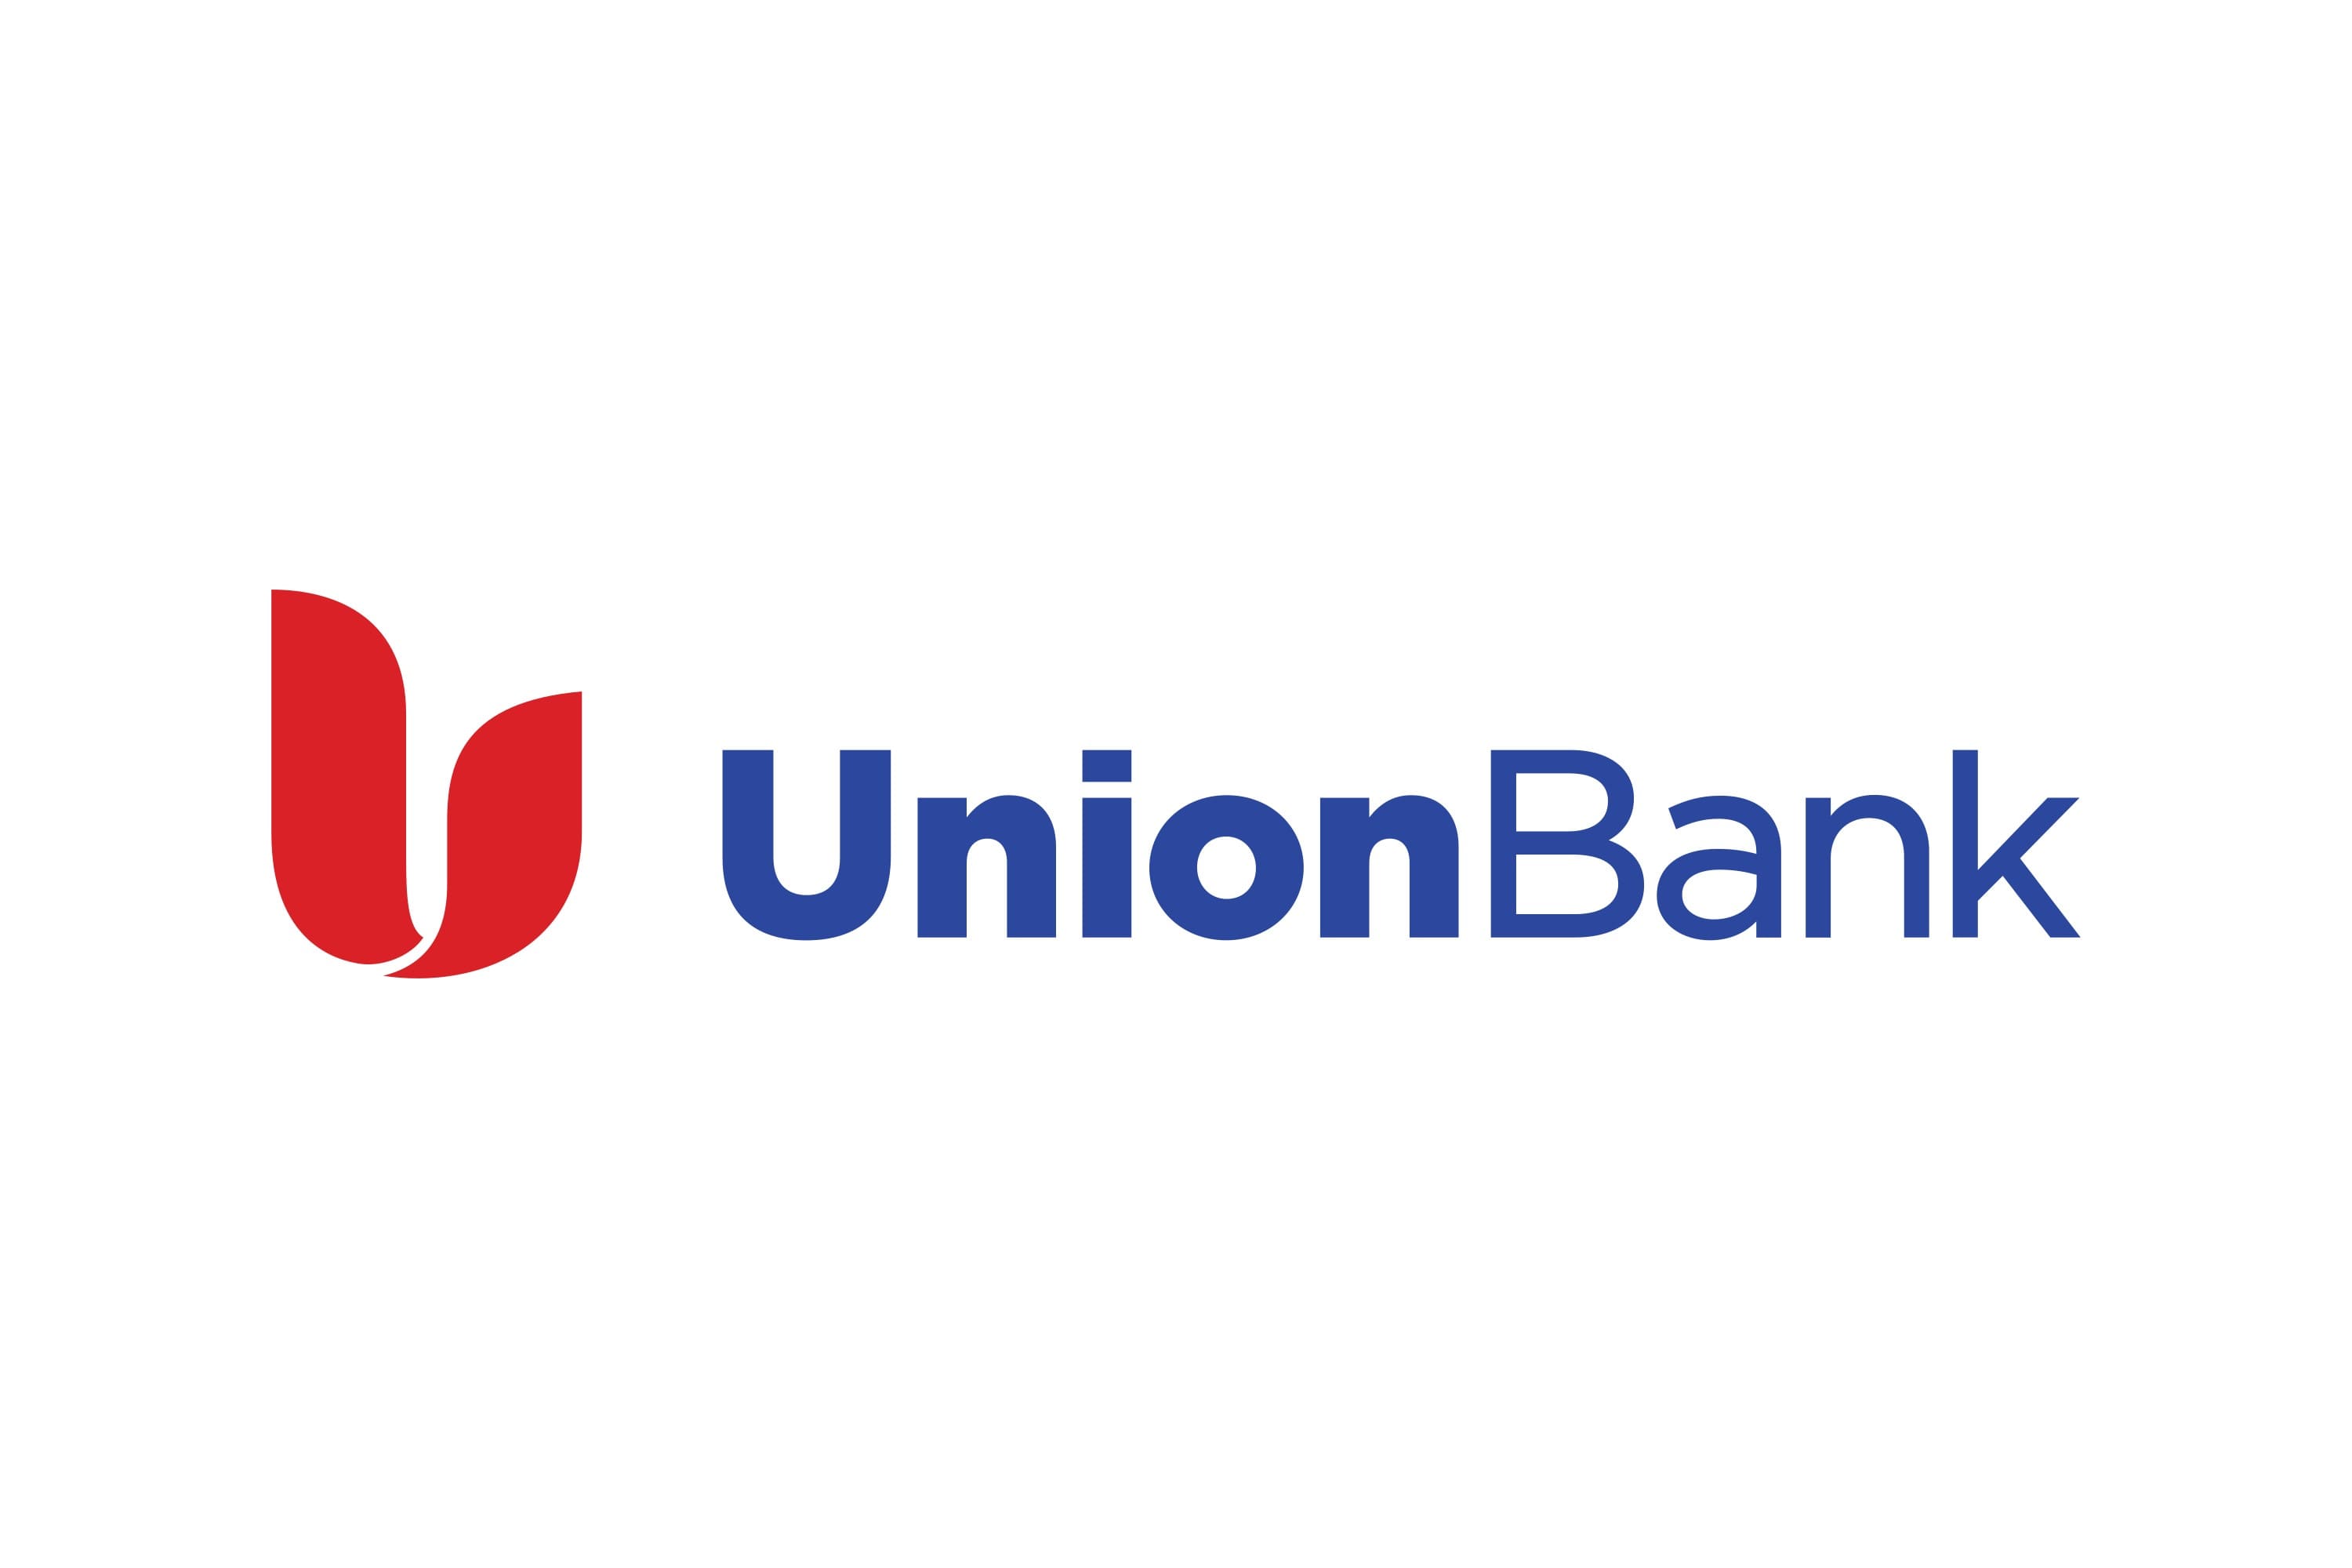 C. Union Bank (Plata)